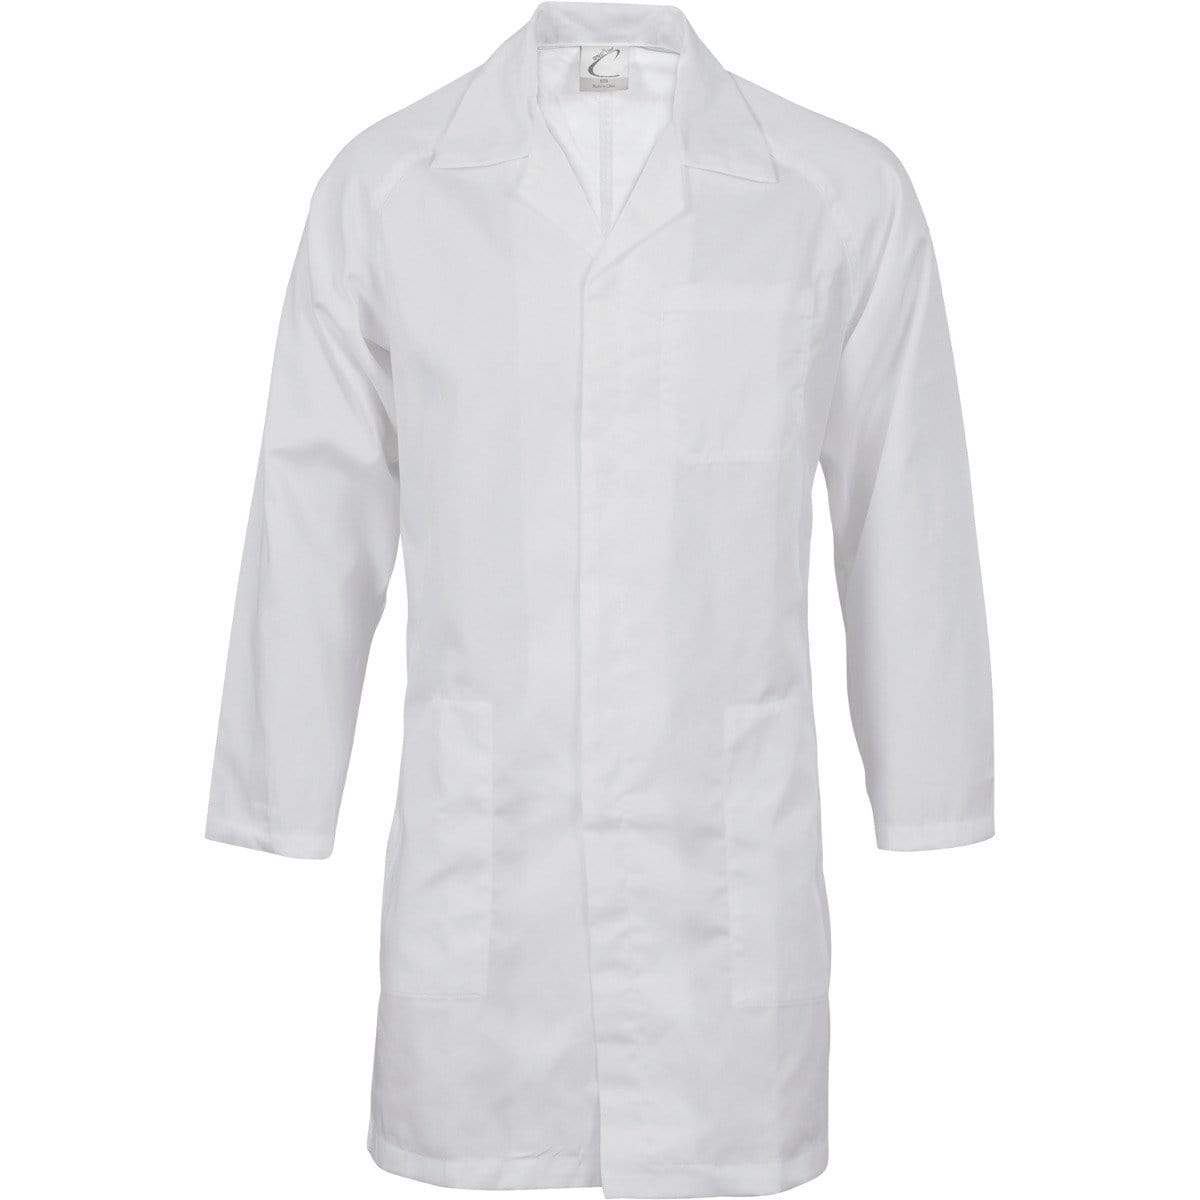 Dnc Workwear Food Industry Dust Coat - 3501 Hospitality & Chefwear DNC Workwear White 87R 